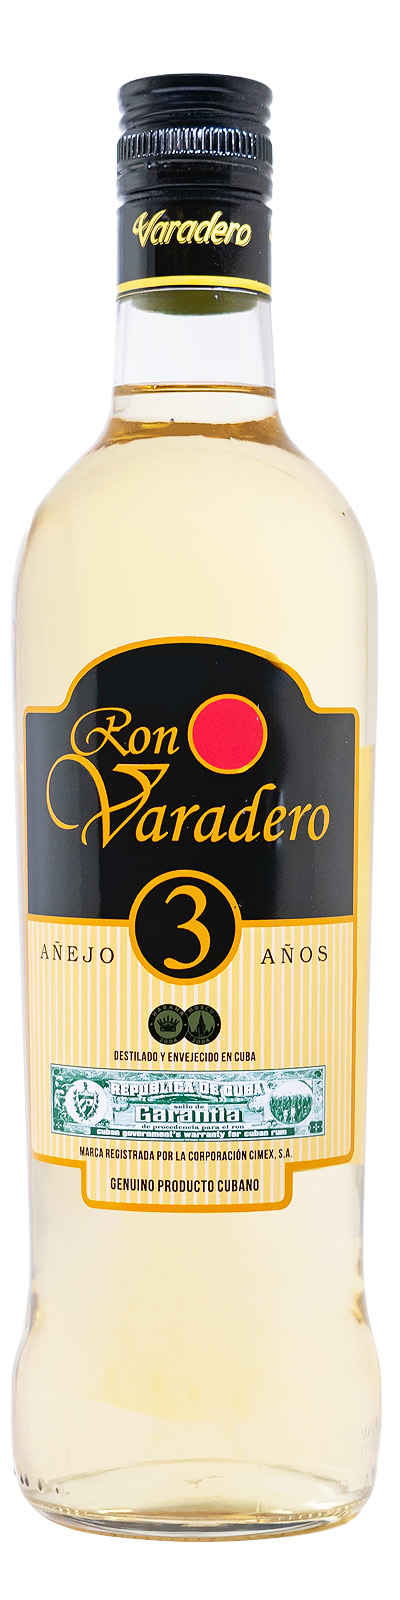 Ron Varadero Anejo 3 Jahre Rum - 0,7L 38% vol